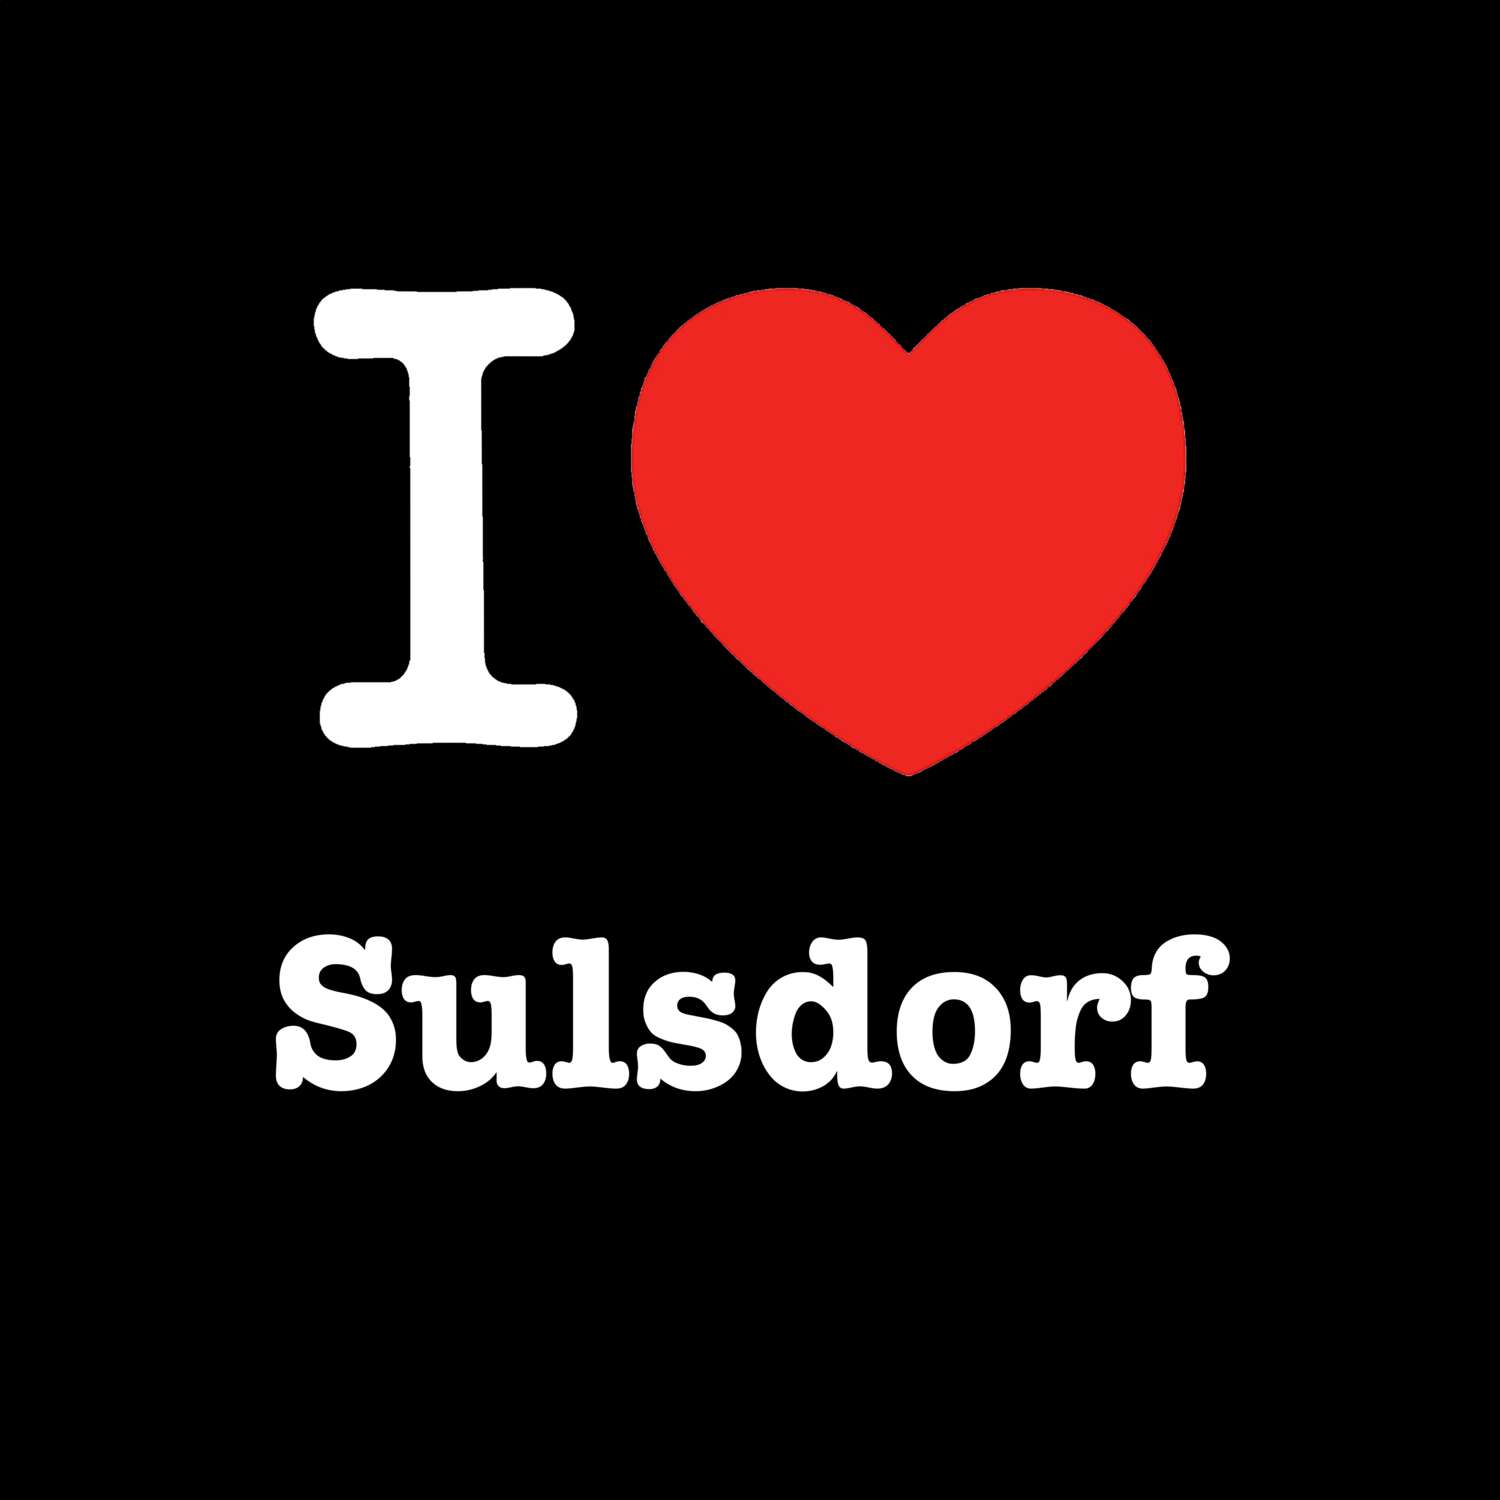 Sulsdorf T-Shirt »I love«